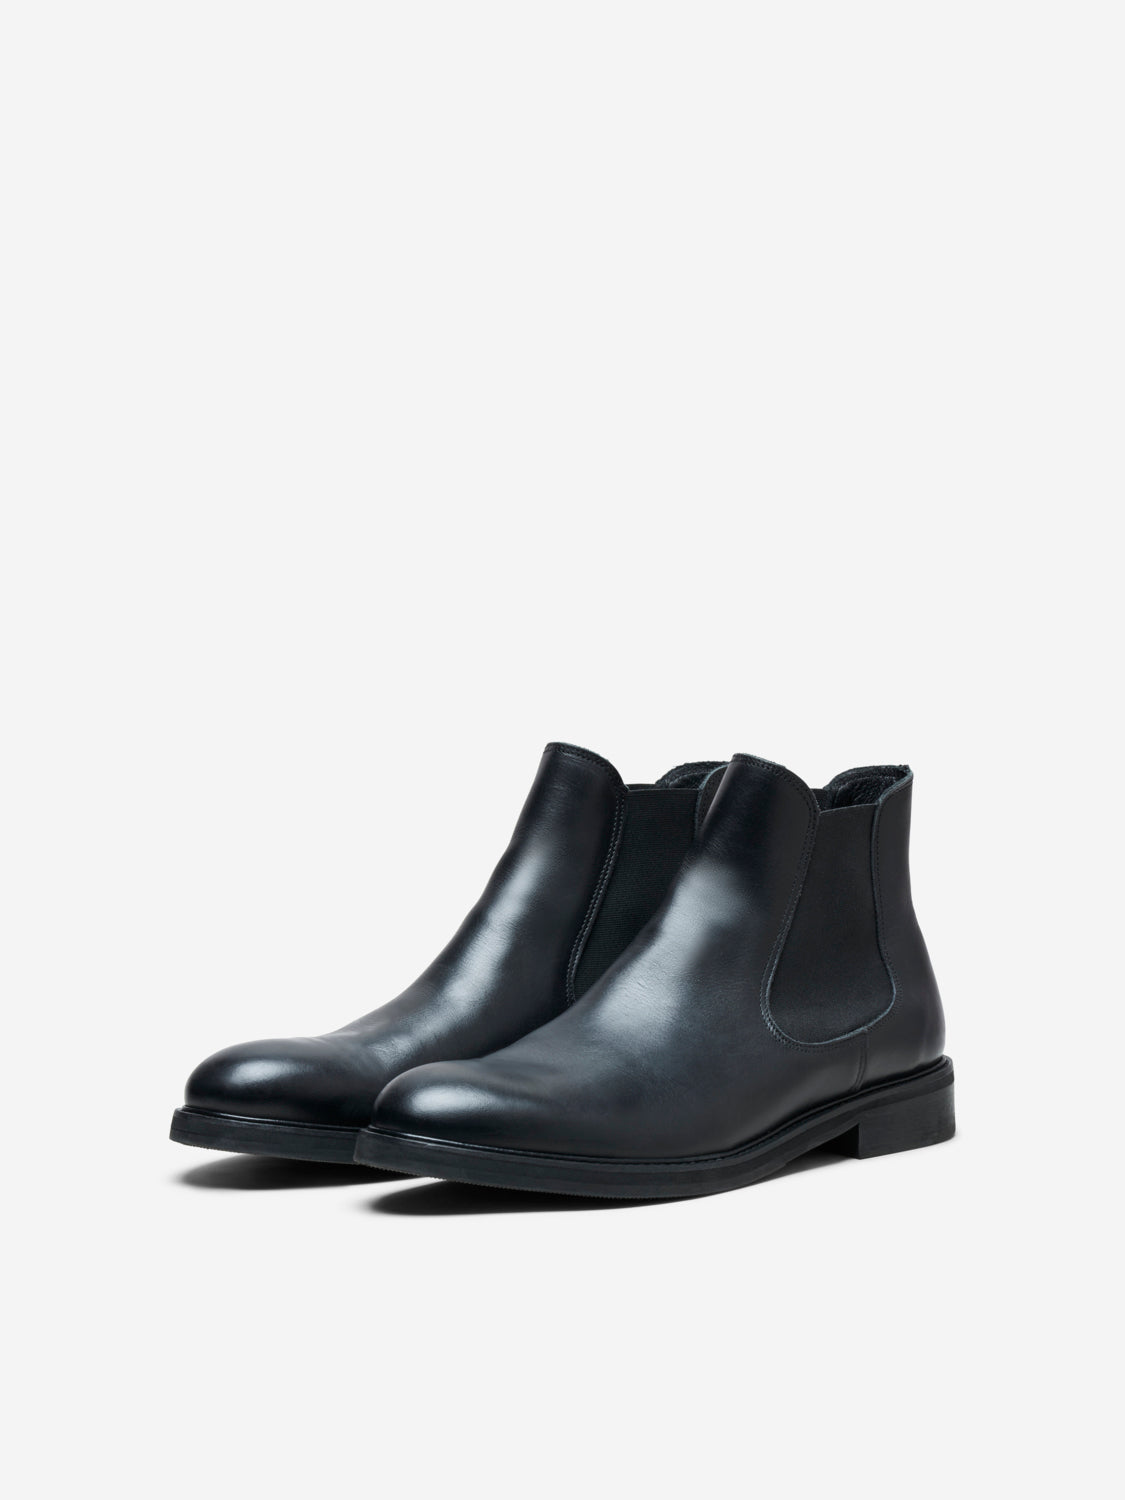 SLHLOUIS Boots - Black